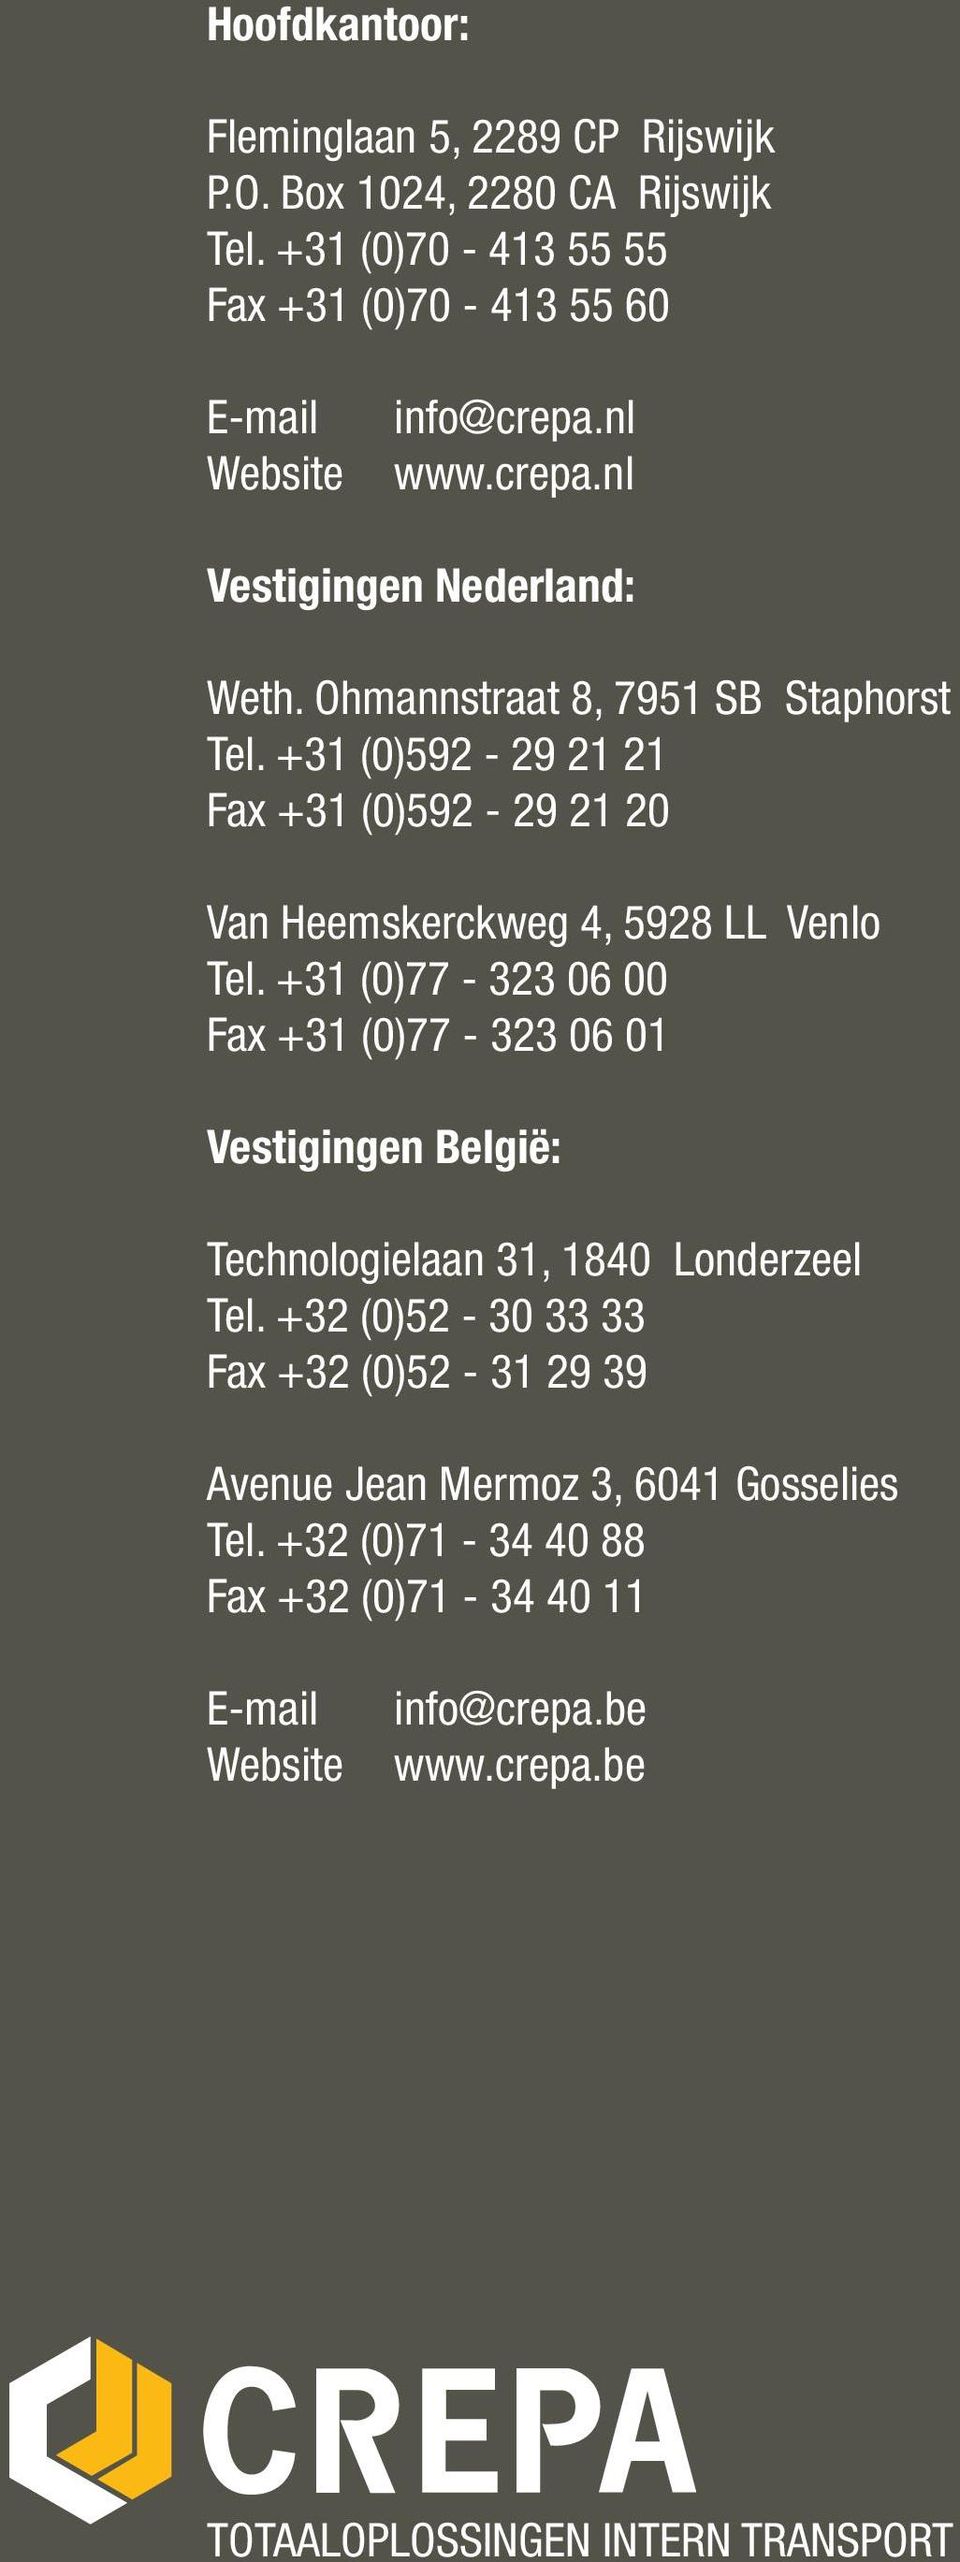 +31 (0)592-29 21 21 Fax +31 (0)592-29 21 20 Van Heemskerckweg 4, 5928 LL Venlo Tel.